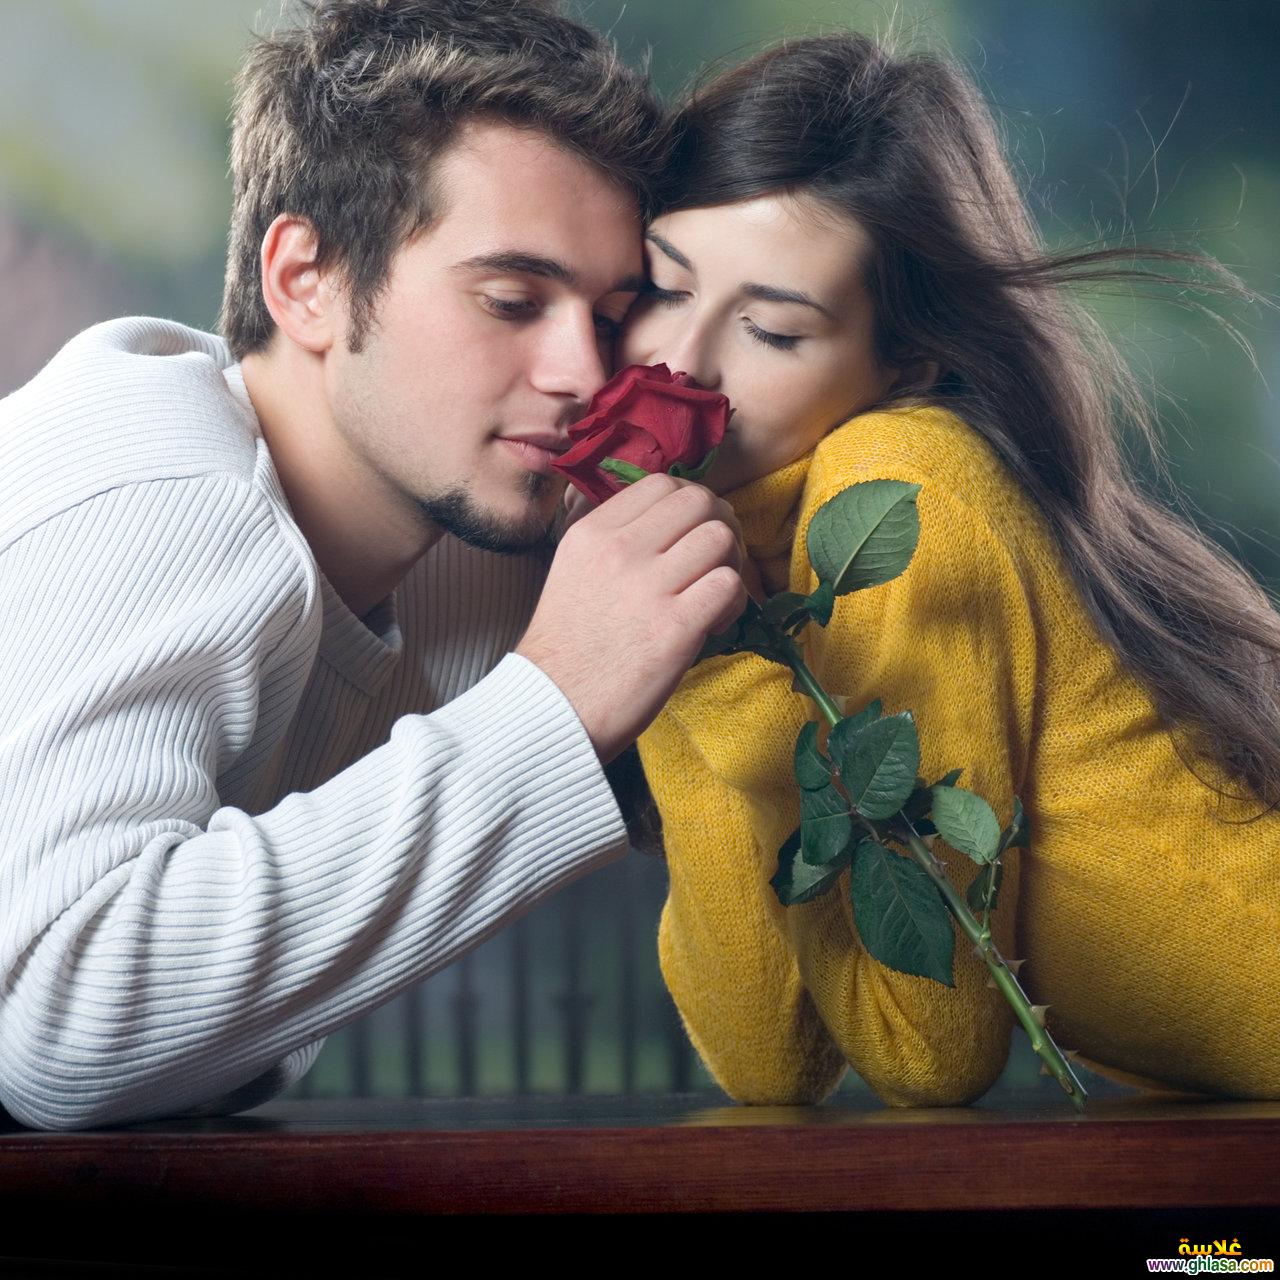 صور حب عيد الحب 2019 ، صور رومانسية وكلام رومانسي لعيد الحب 2019 do.php?img=63660